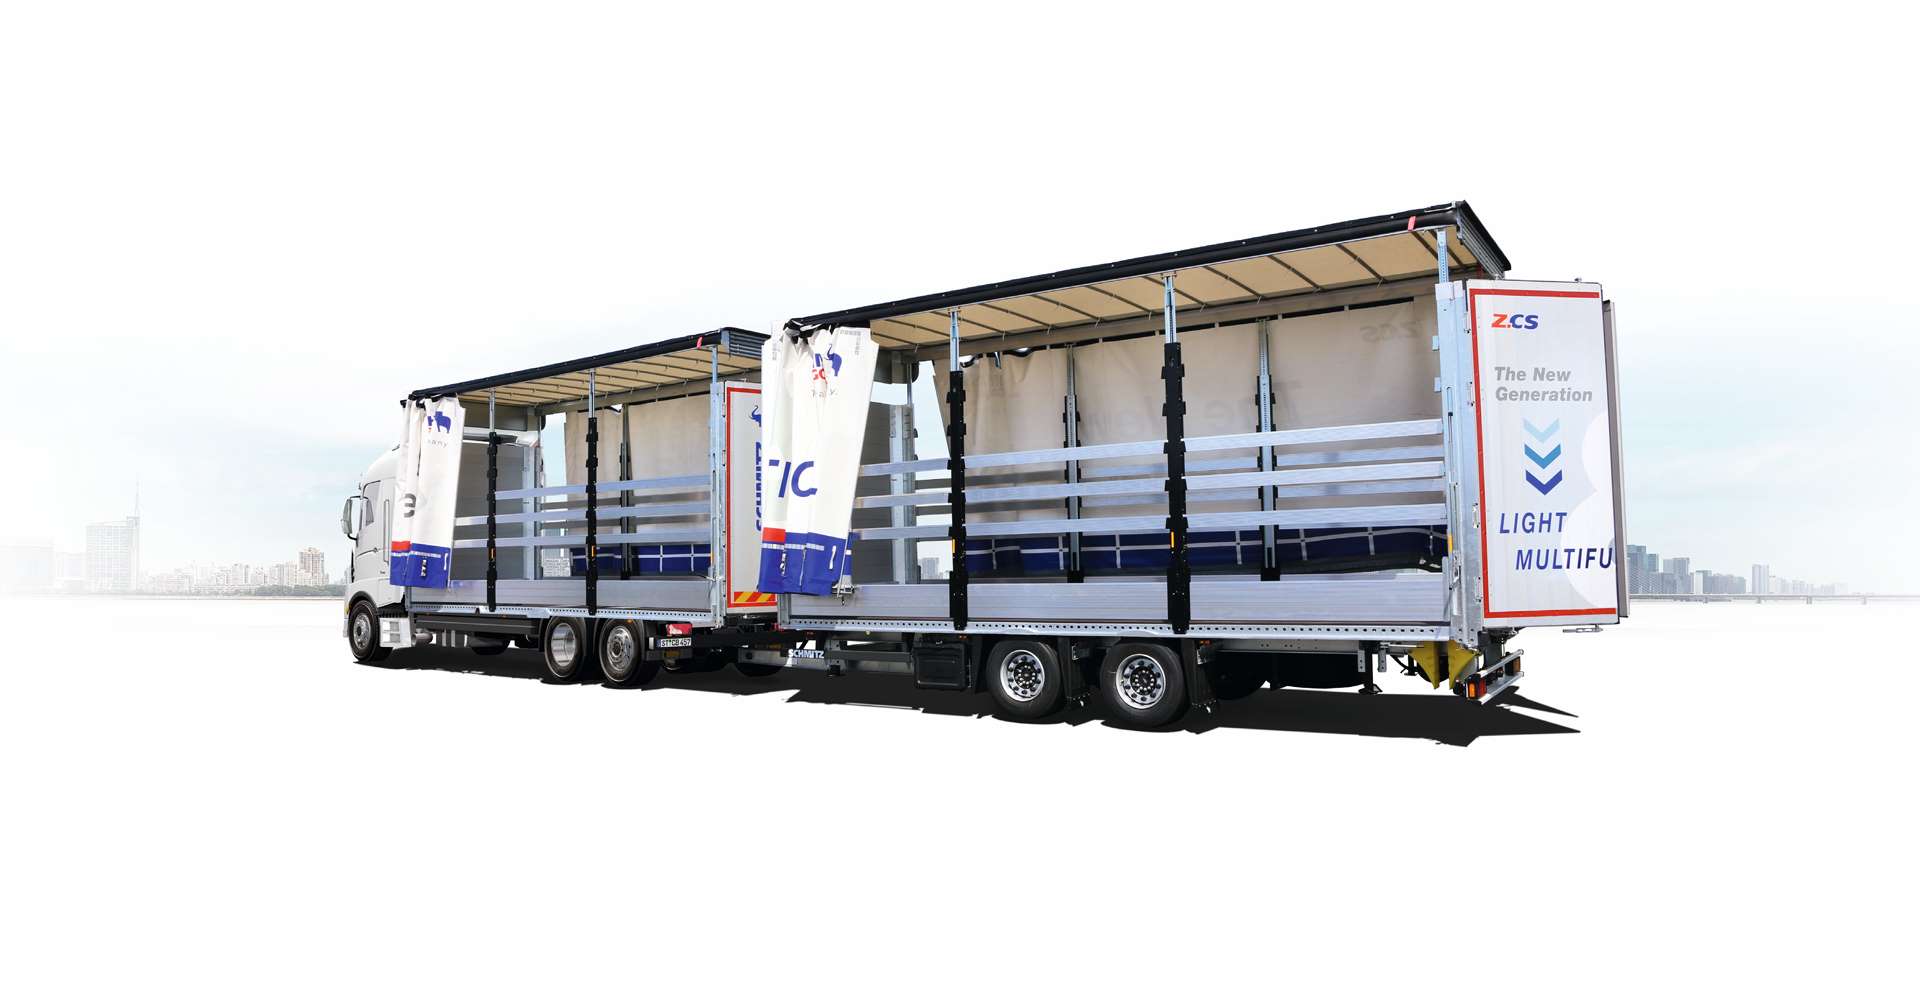 M.CS Z.CS truck body and trailer combination